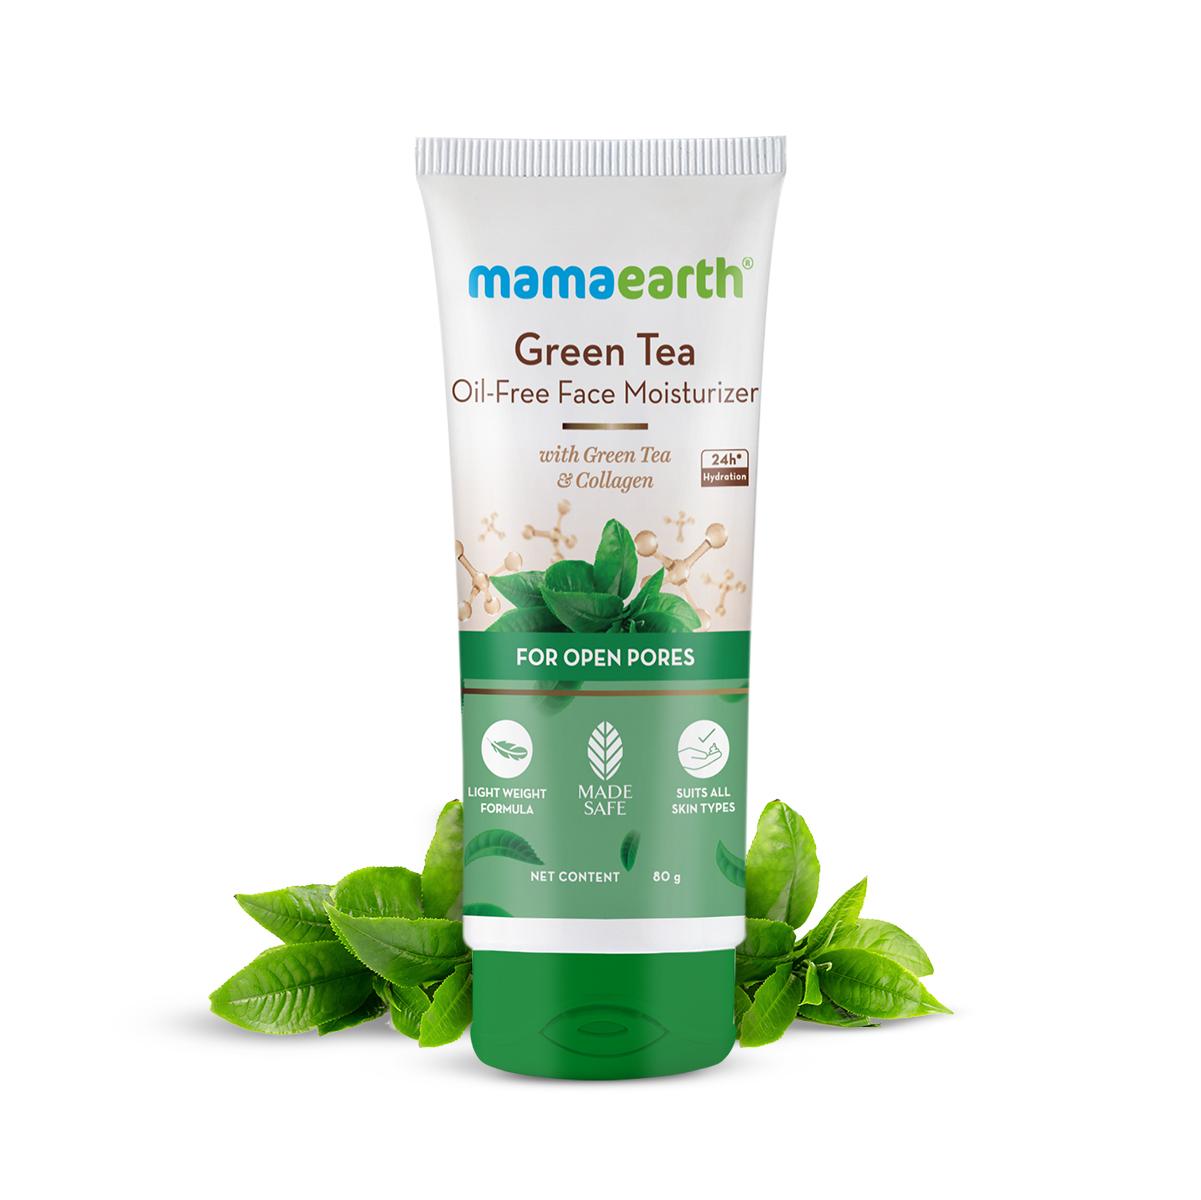 green tea oil-free face moisturizer with green tea & collagen for open pores- 80 g